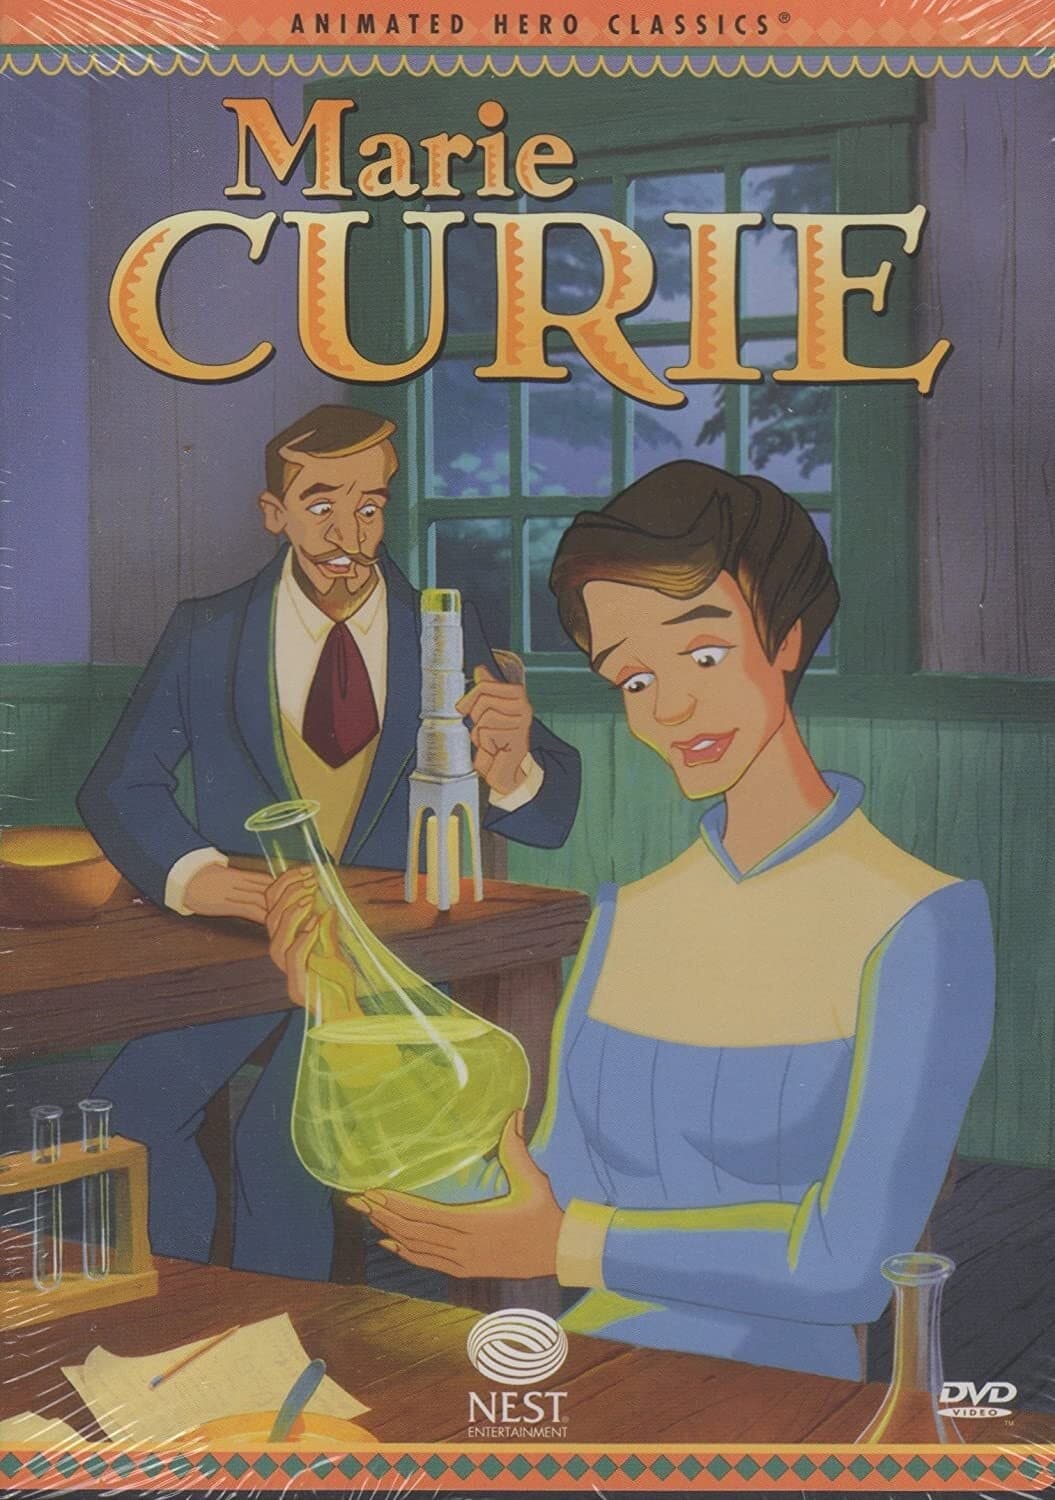 Animated Hero Classics: Marie Curie